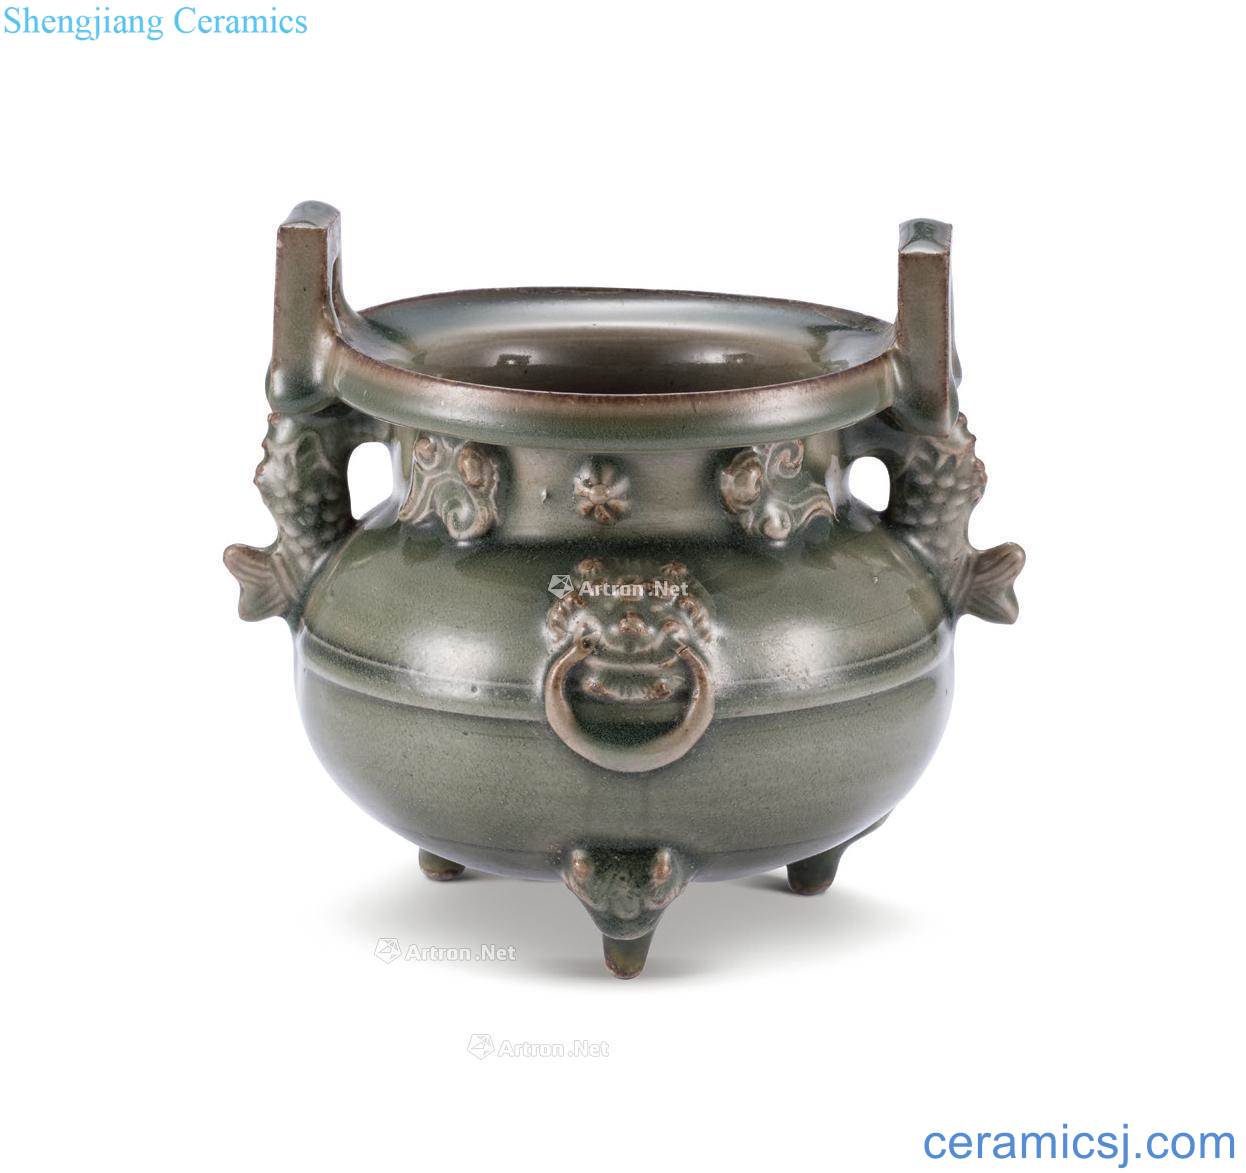 yuan Yao state kiln green glaze decals benevolent bit ring ears furnace with three legs